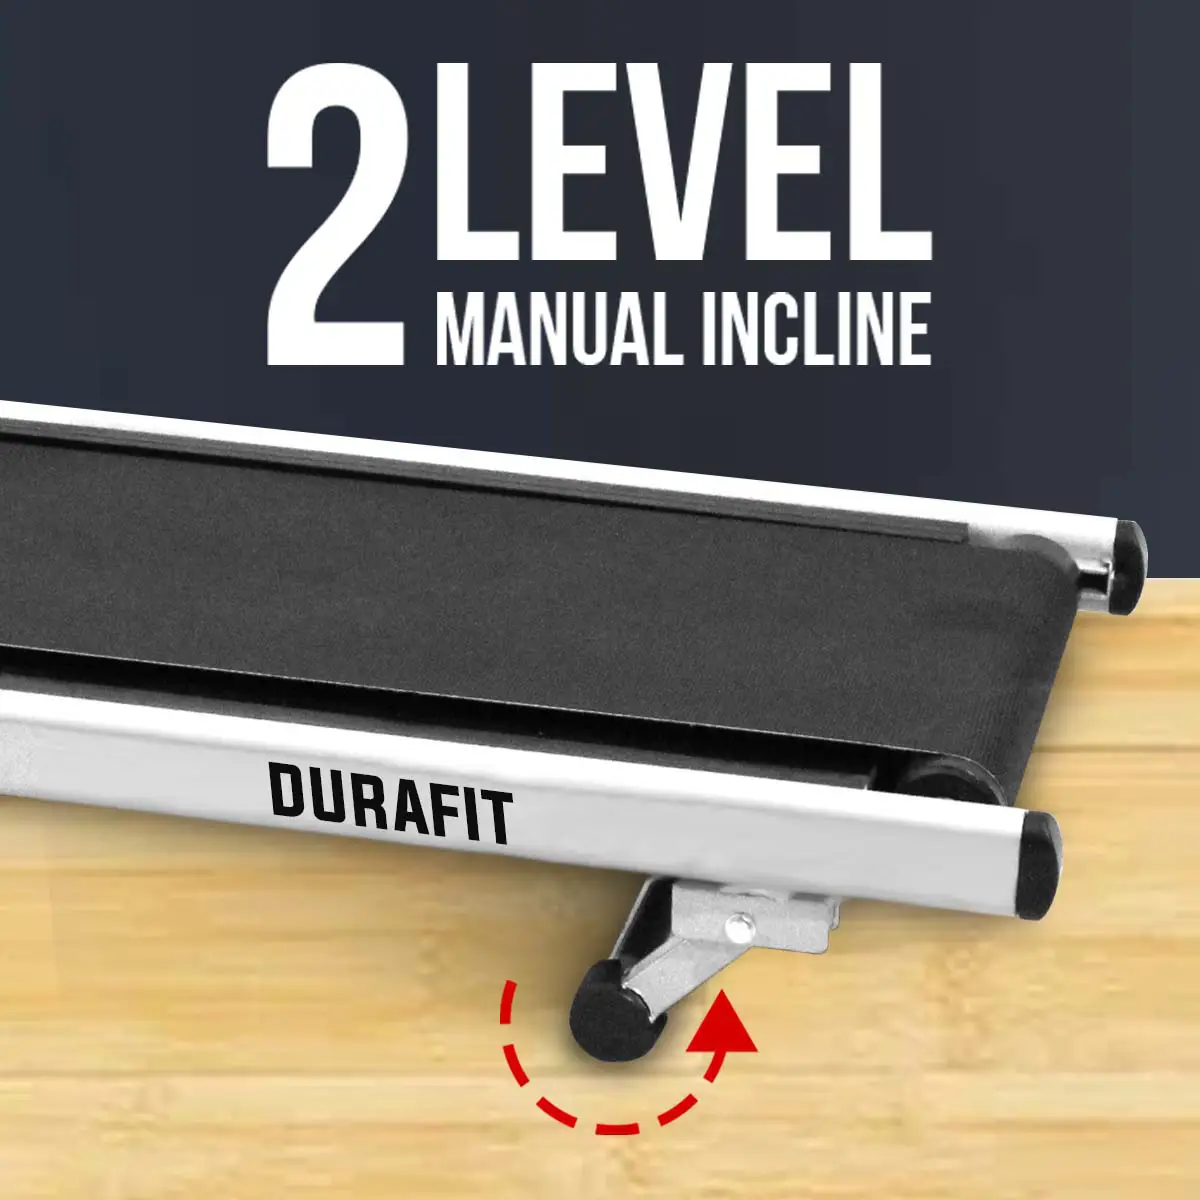 Durafit Manual Treadmill Hmtt1 with 2 level manual incline